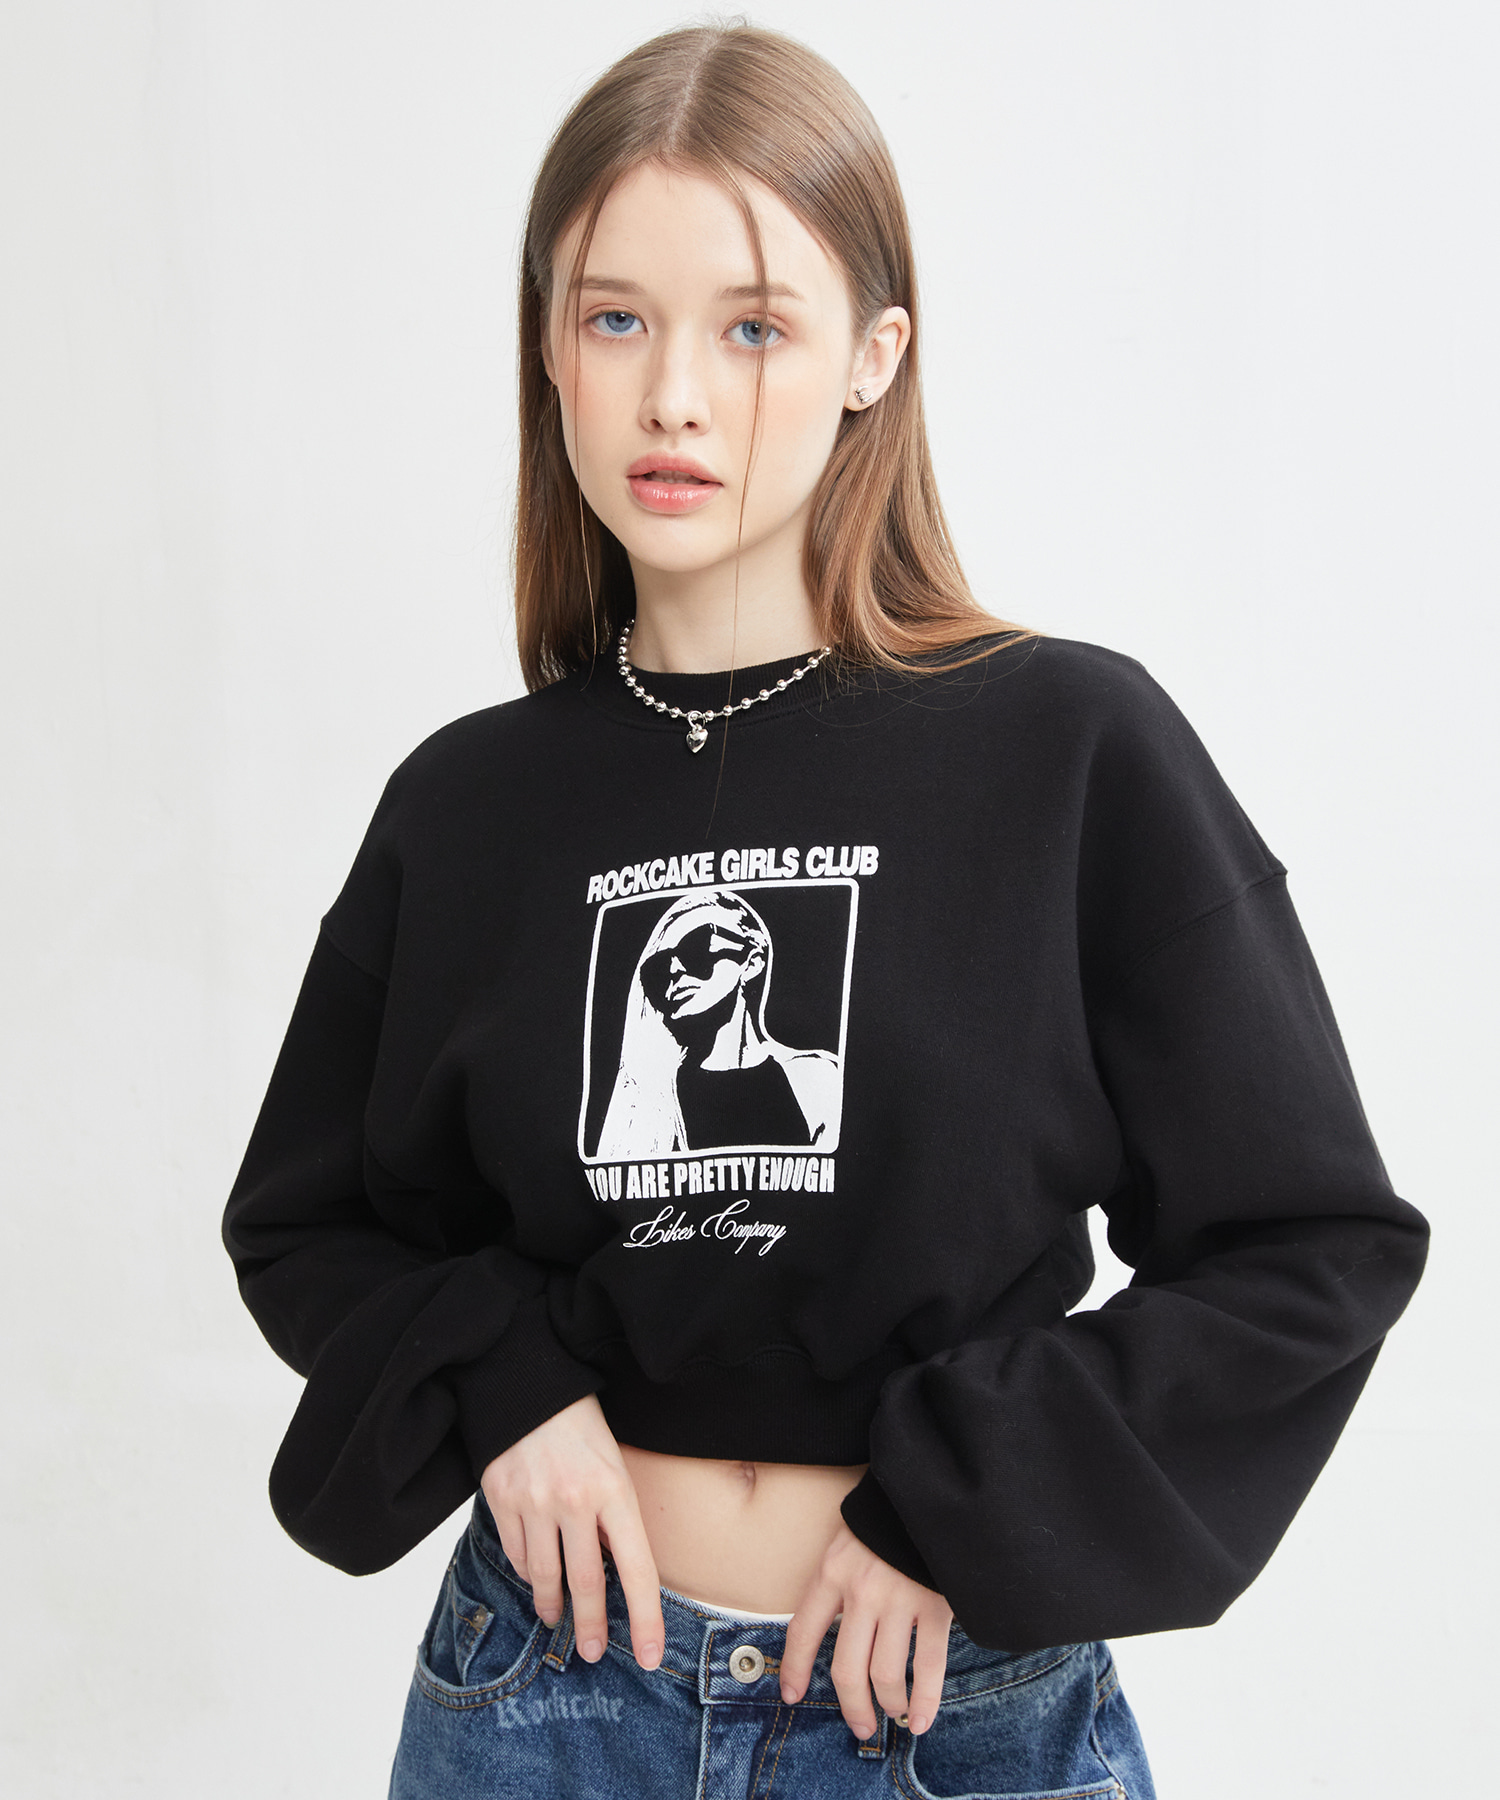 Girls Club Cropped Sweatshirt - Black